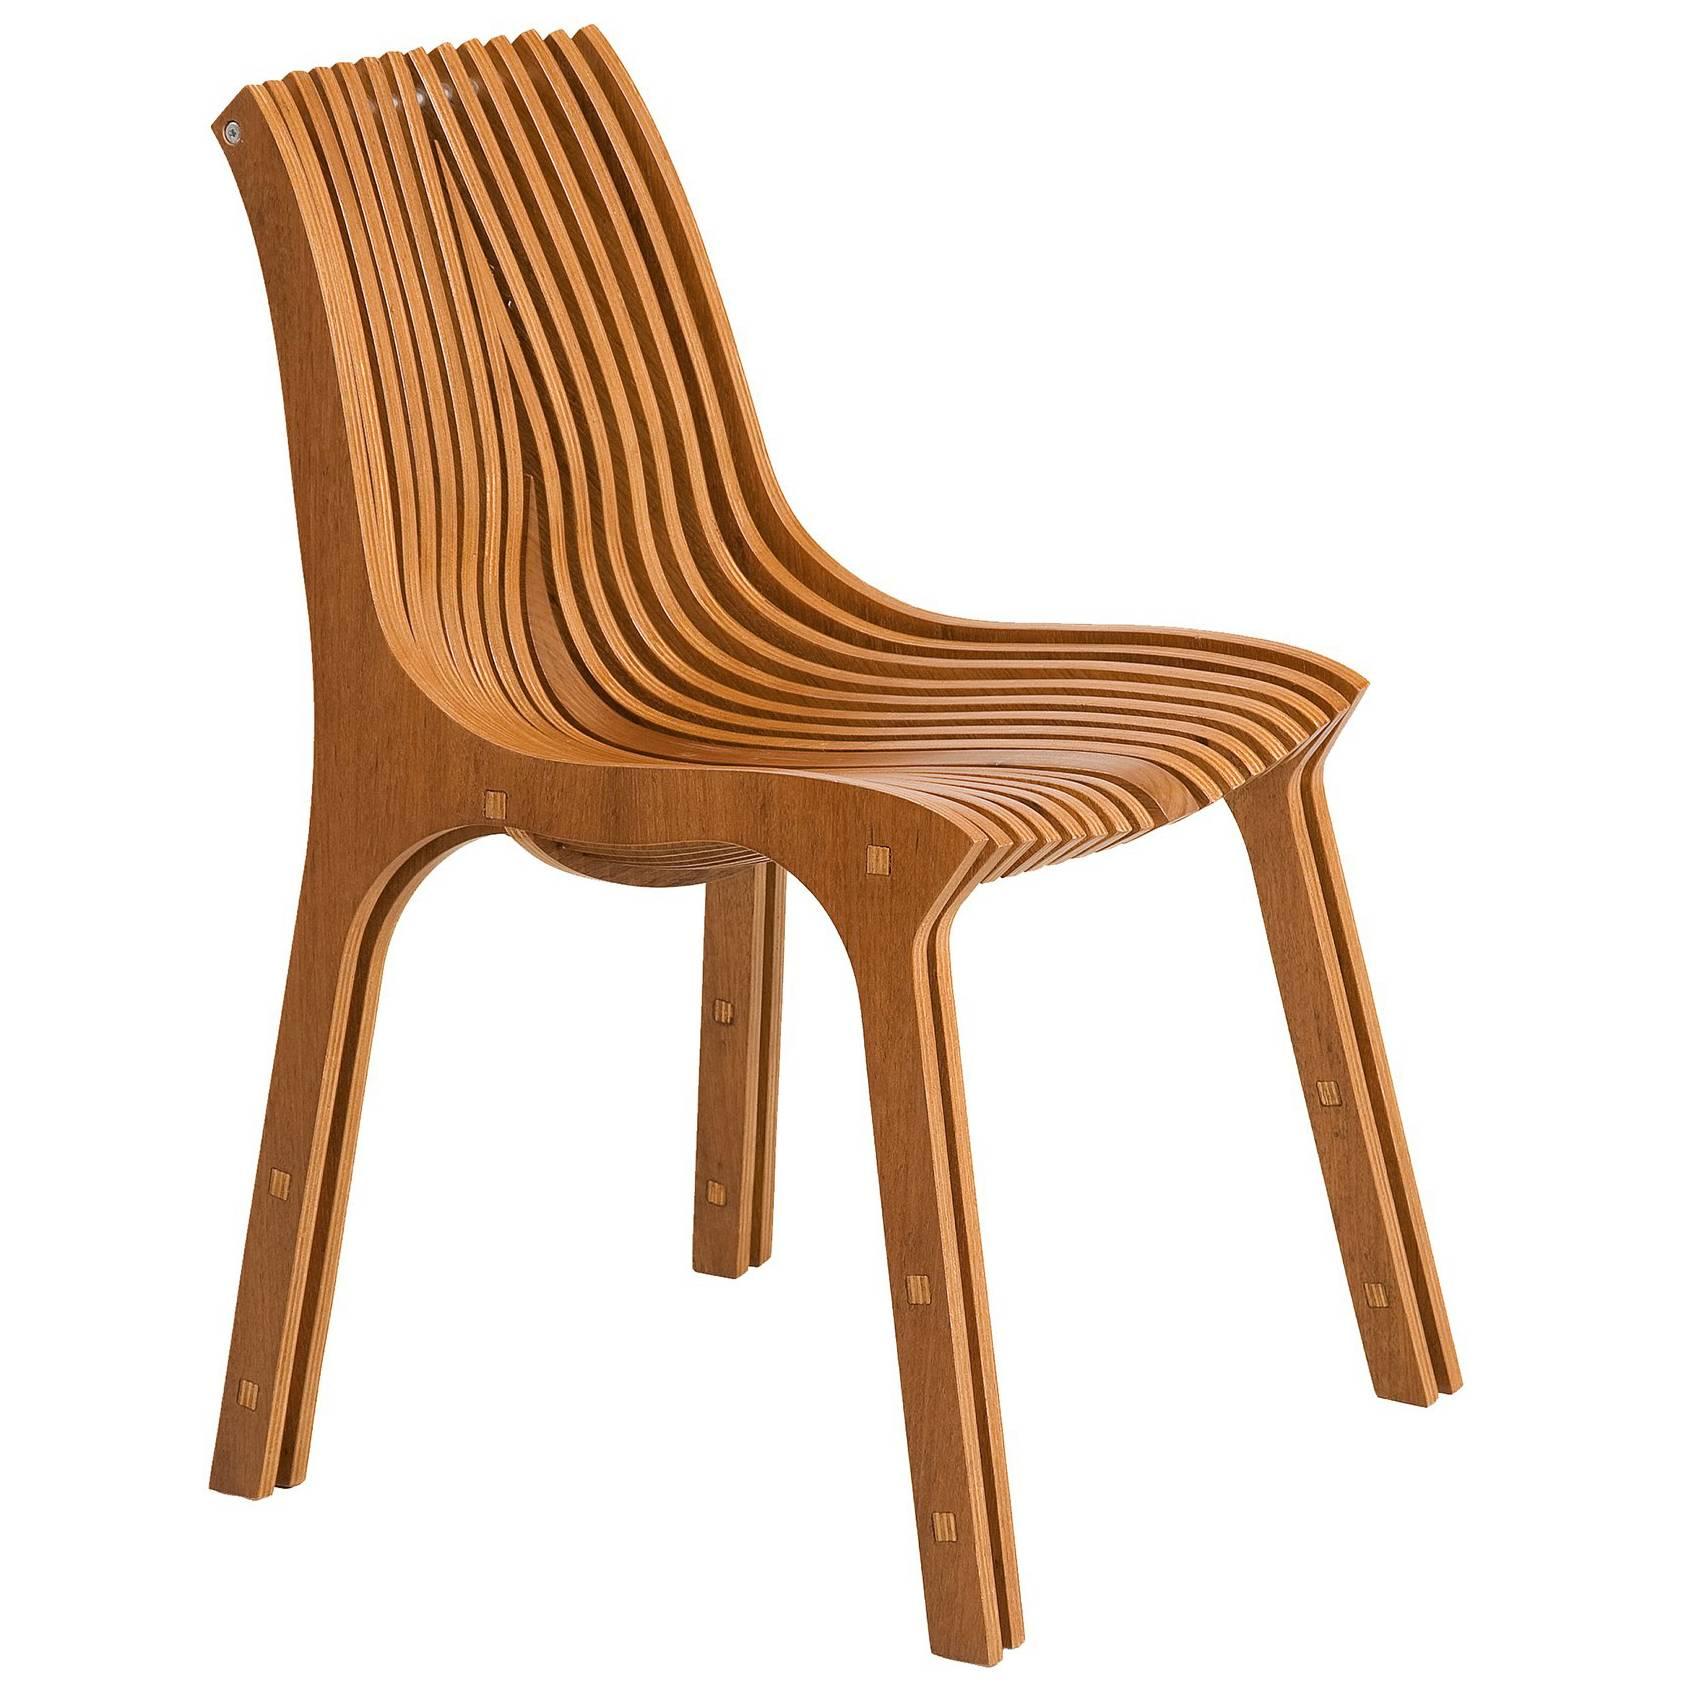 Tupi Brazilian Contemporary Wood Chair by Lattoog